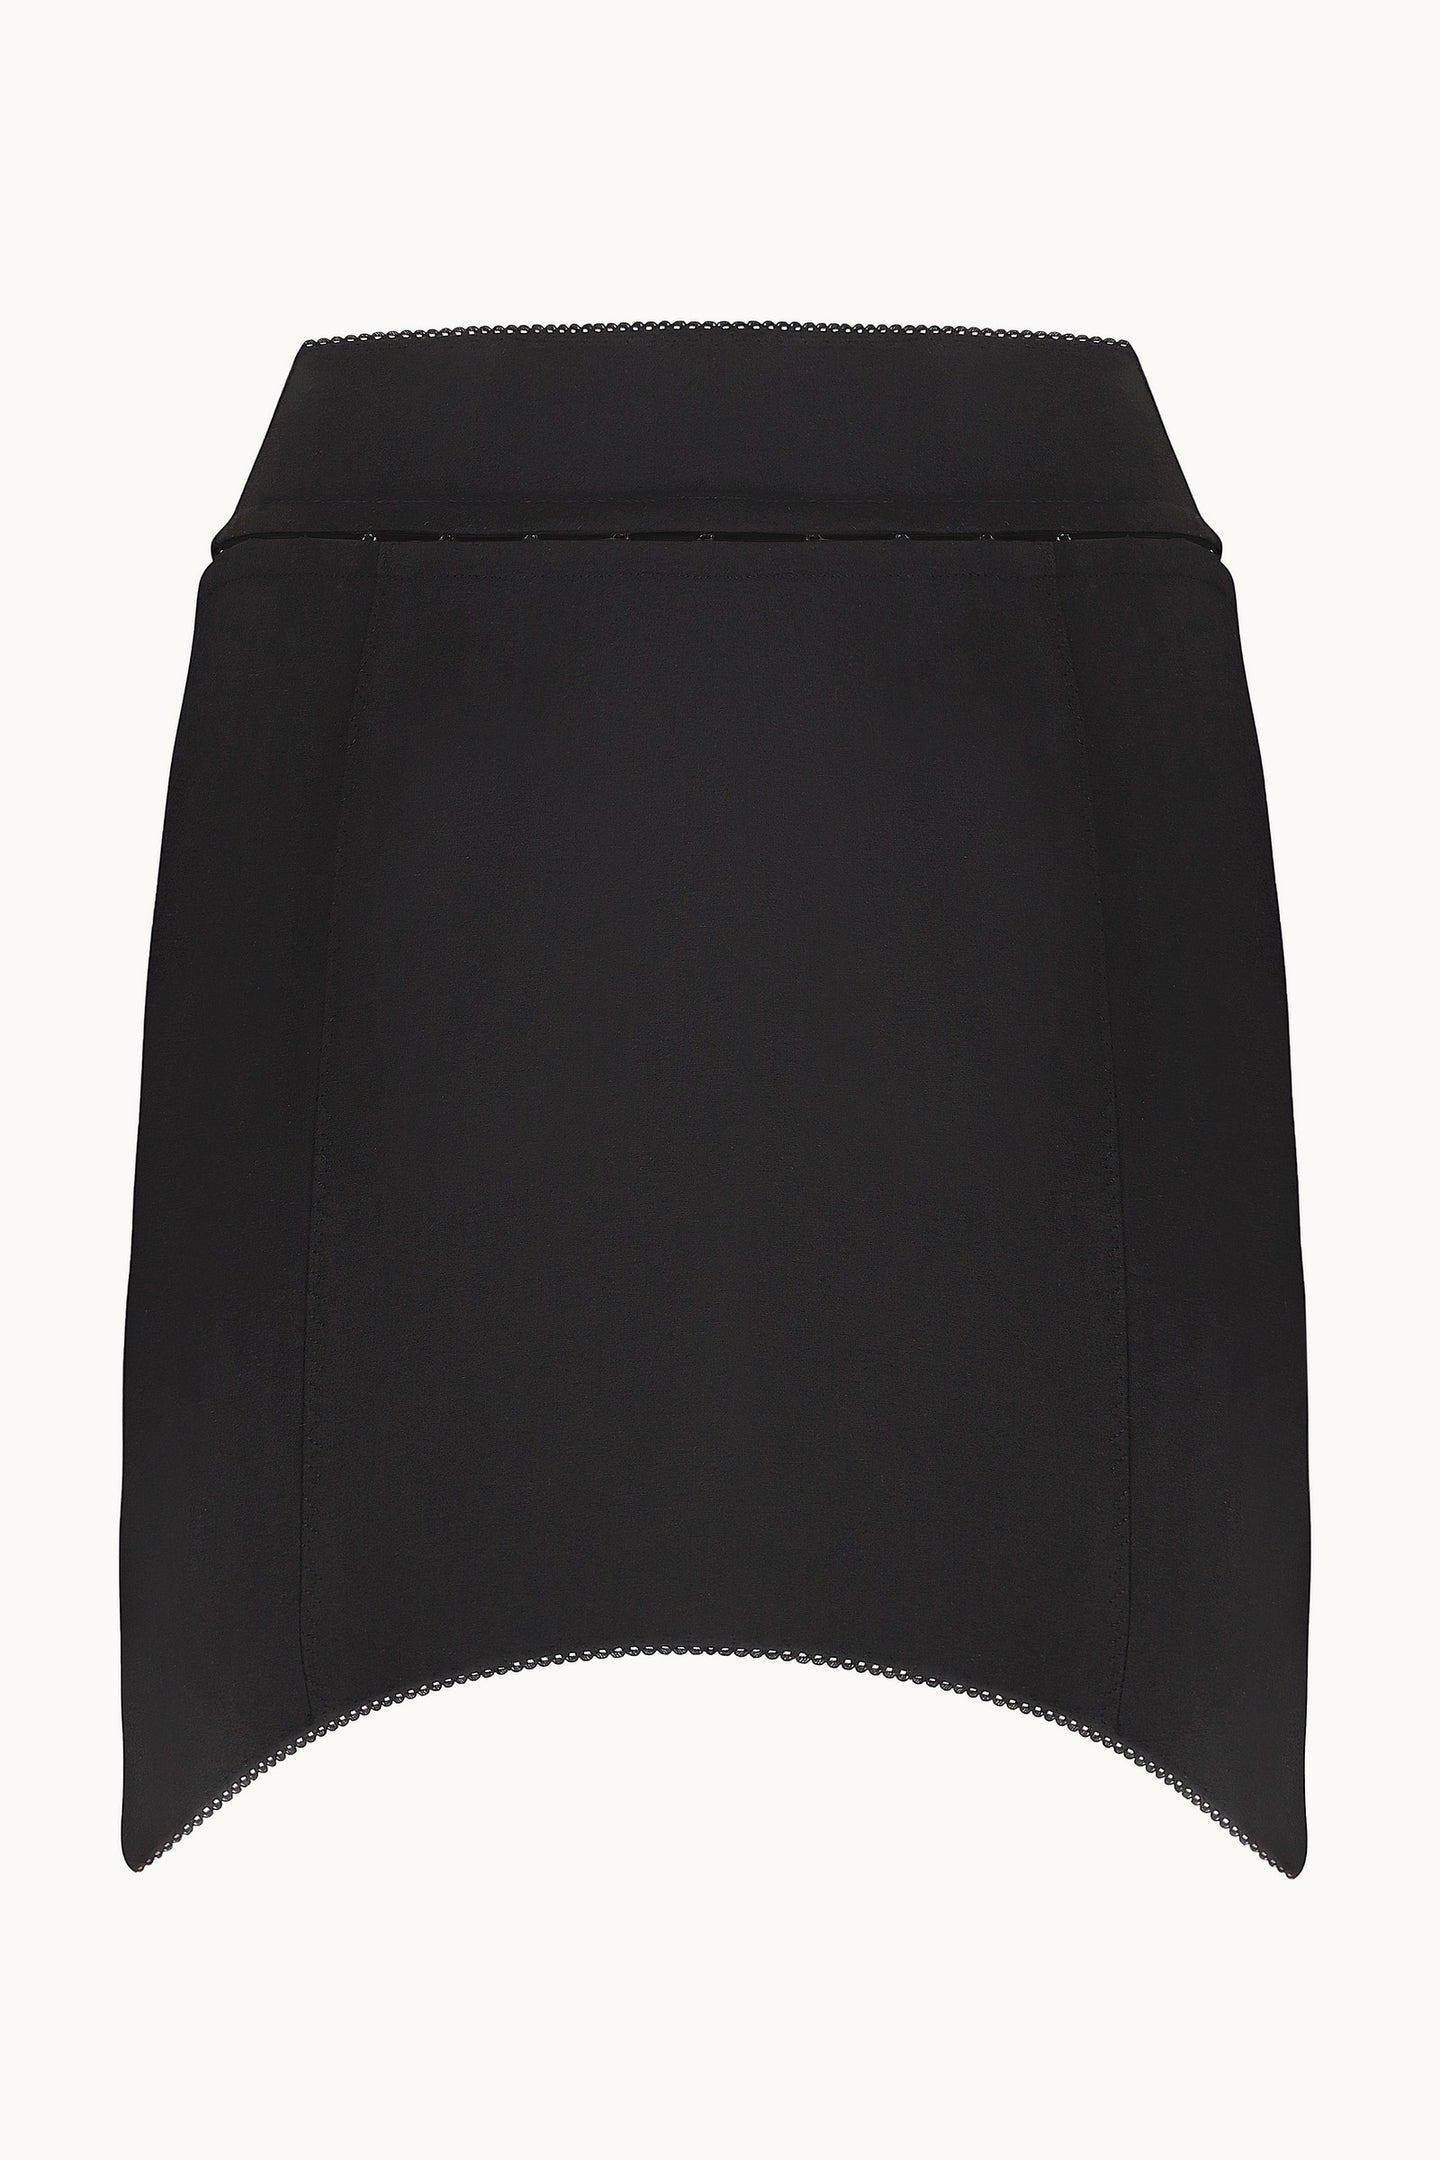 Madi black skirt back view